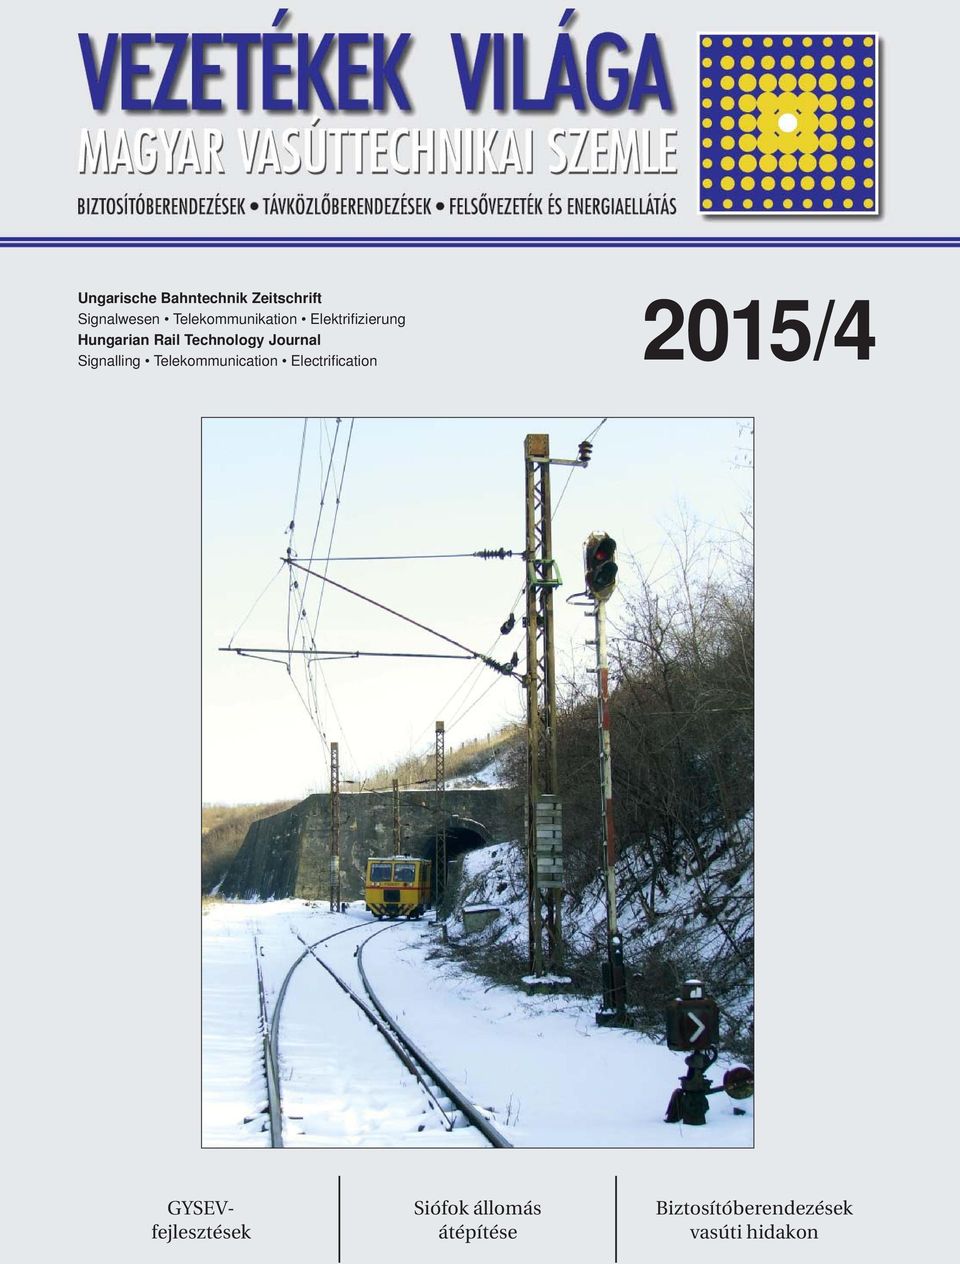 Journal Signalling Telekommunication Electrifi cation 2015/4